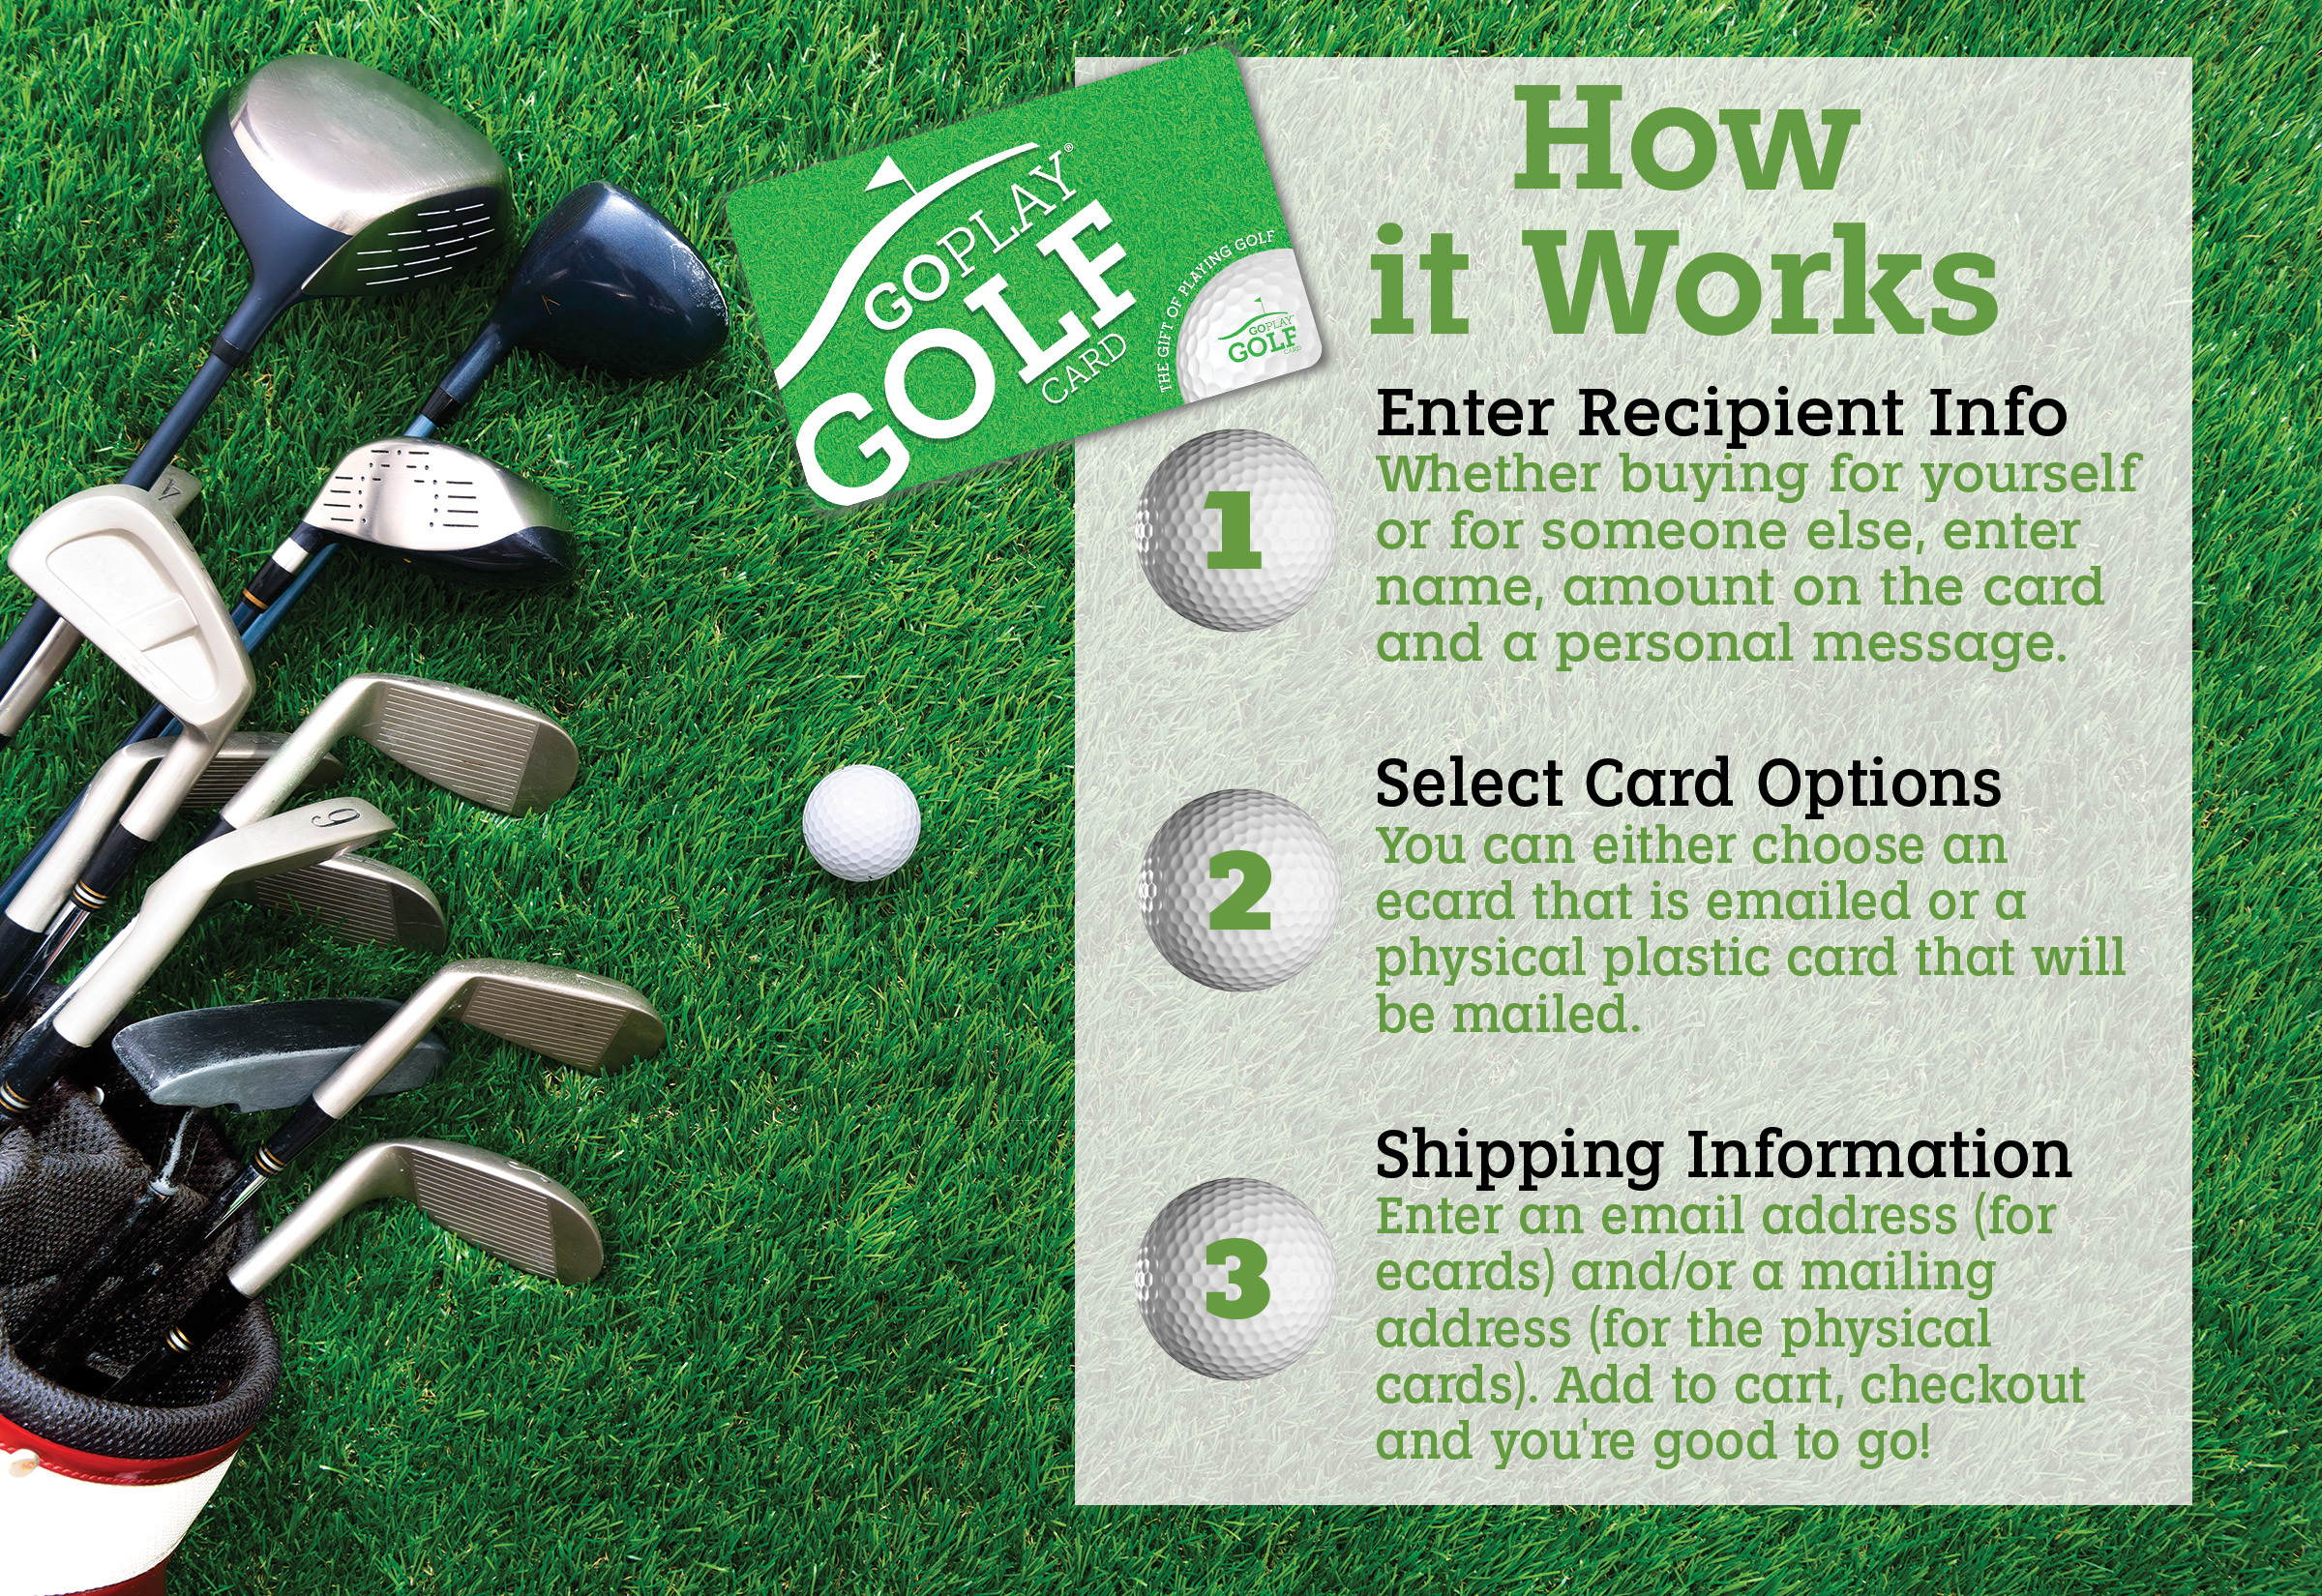 Go Play Golf eGift Card at Virgin Experience Gifts